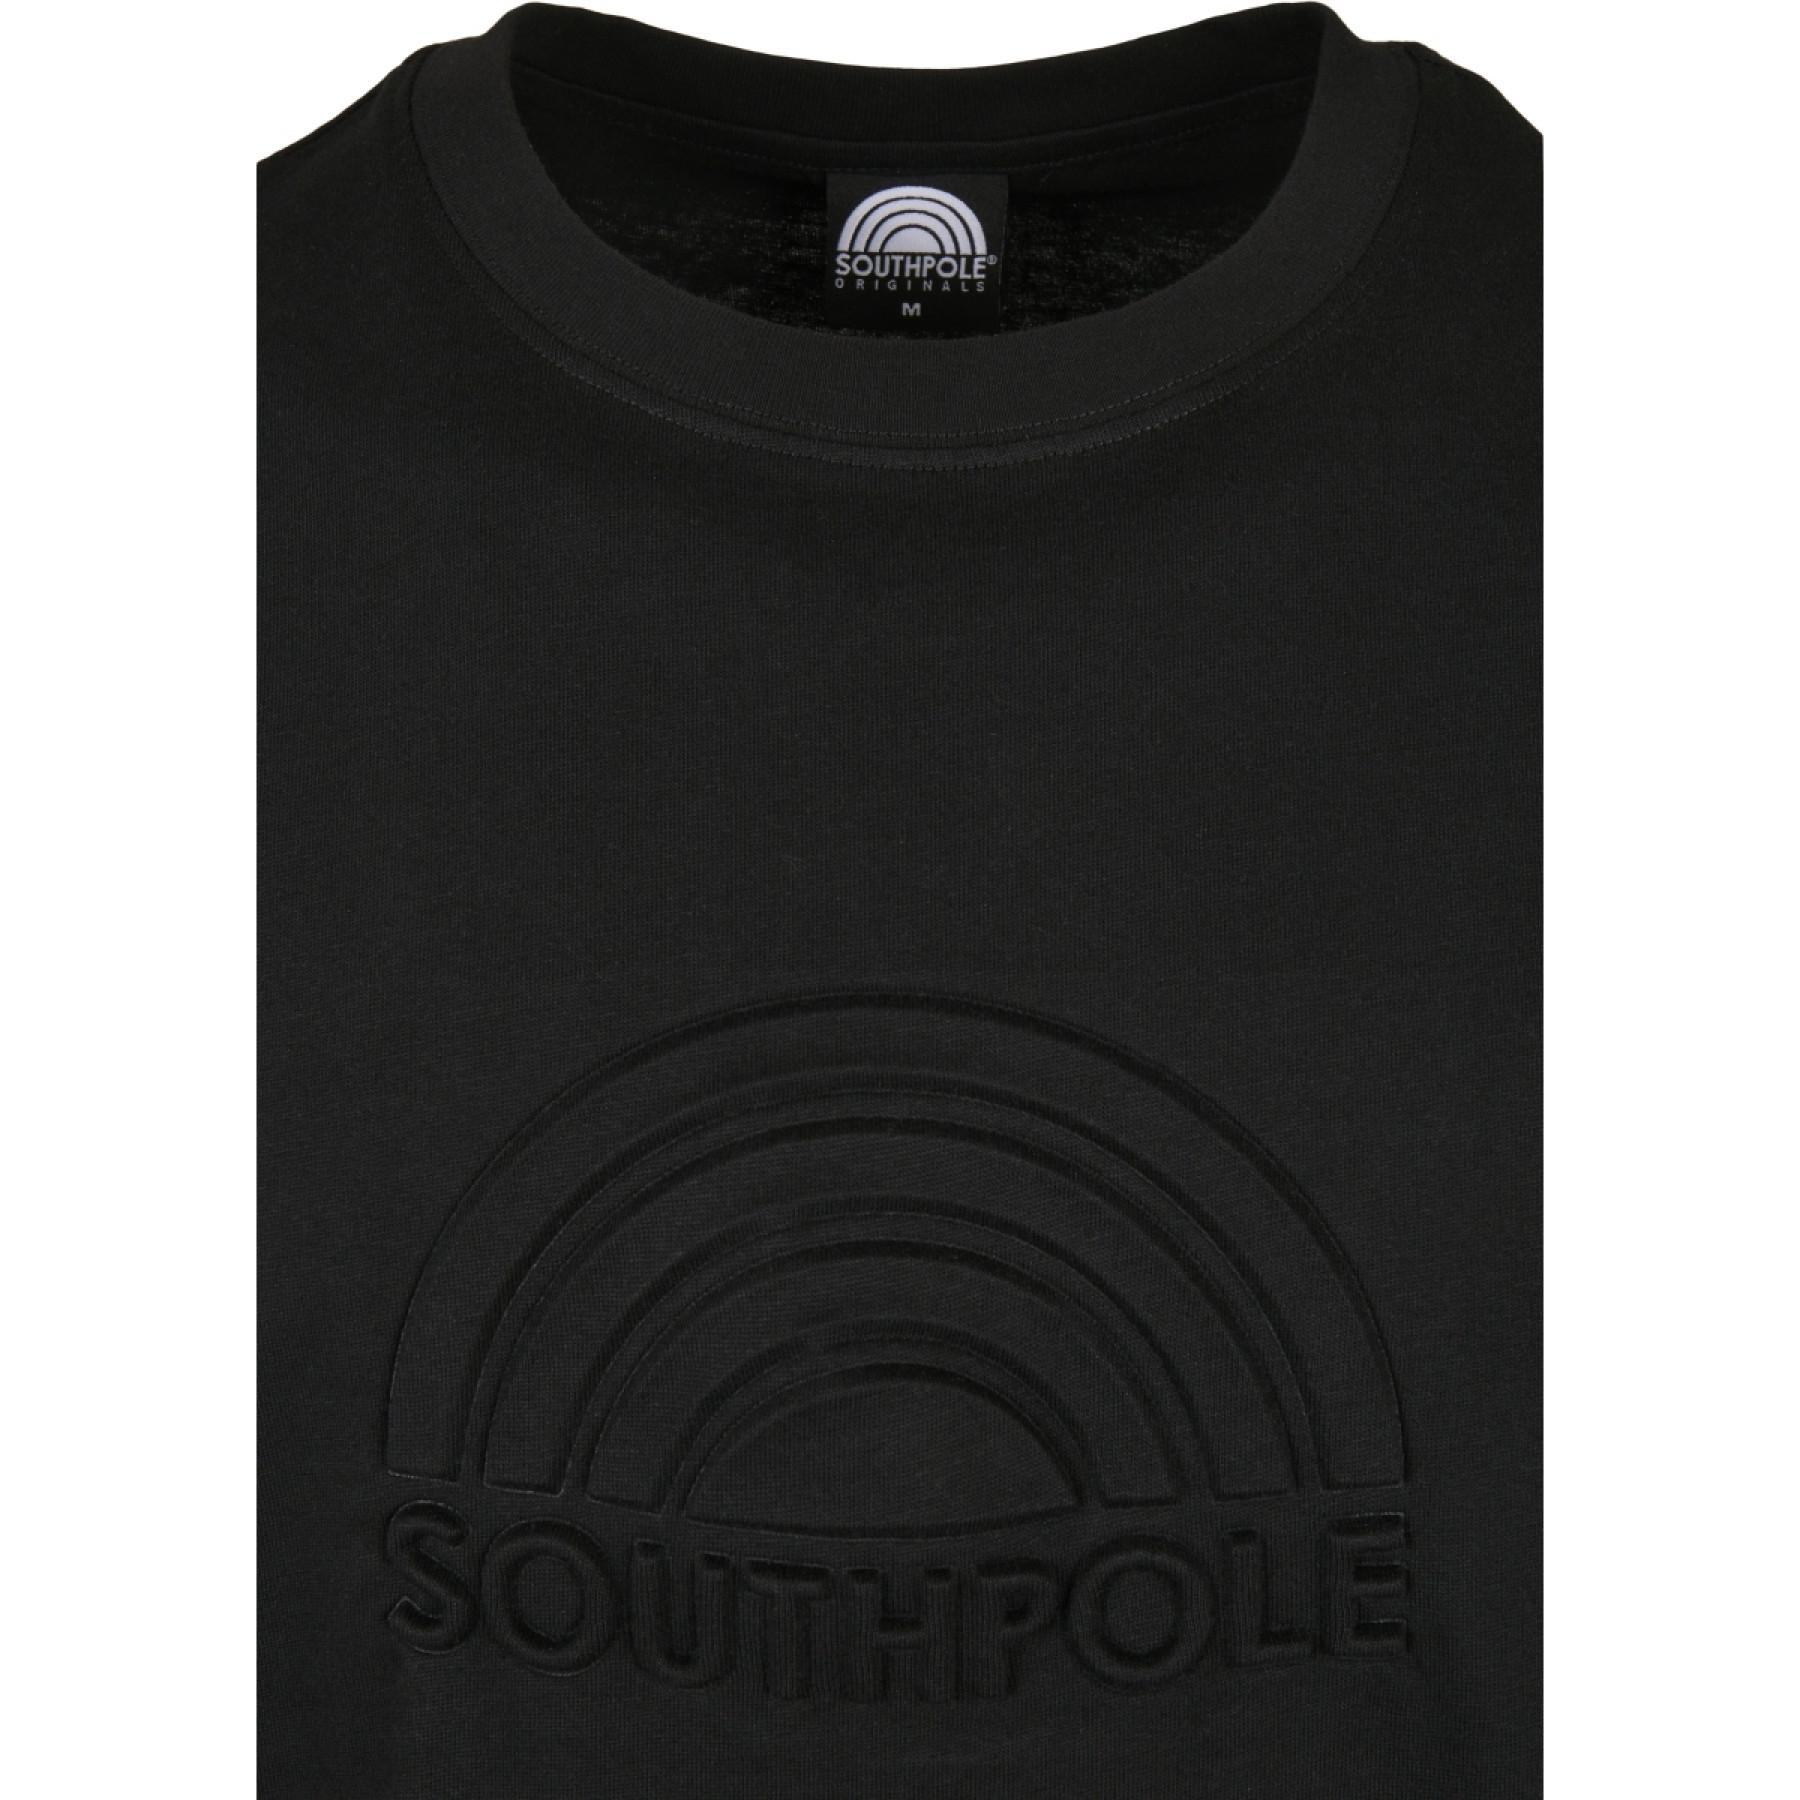 Camiseta Southpole 3d